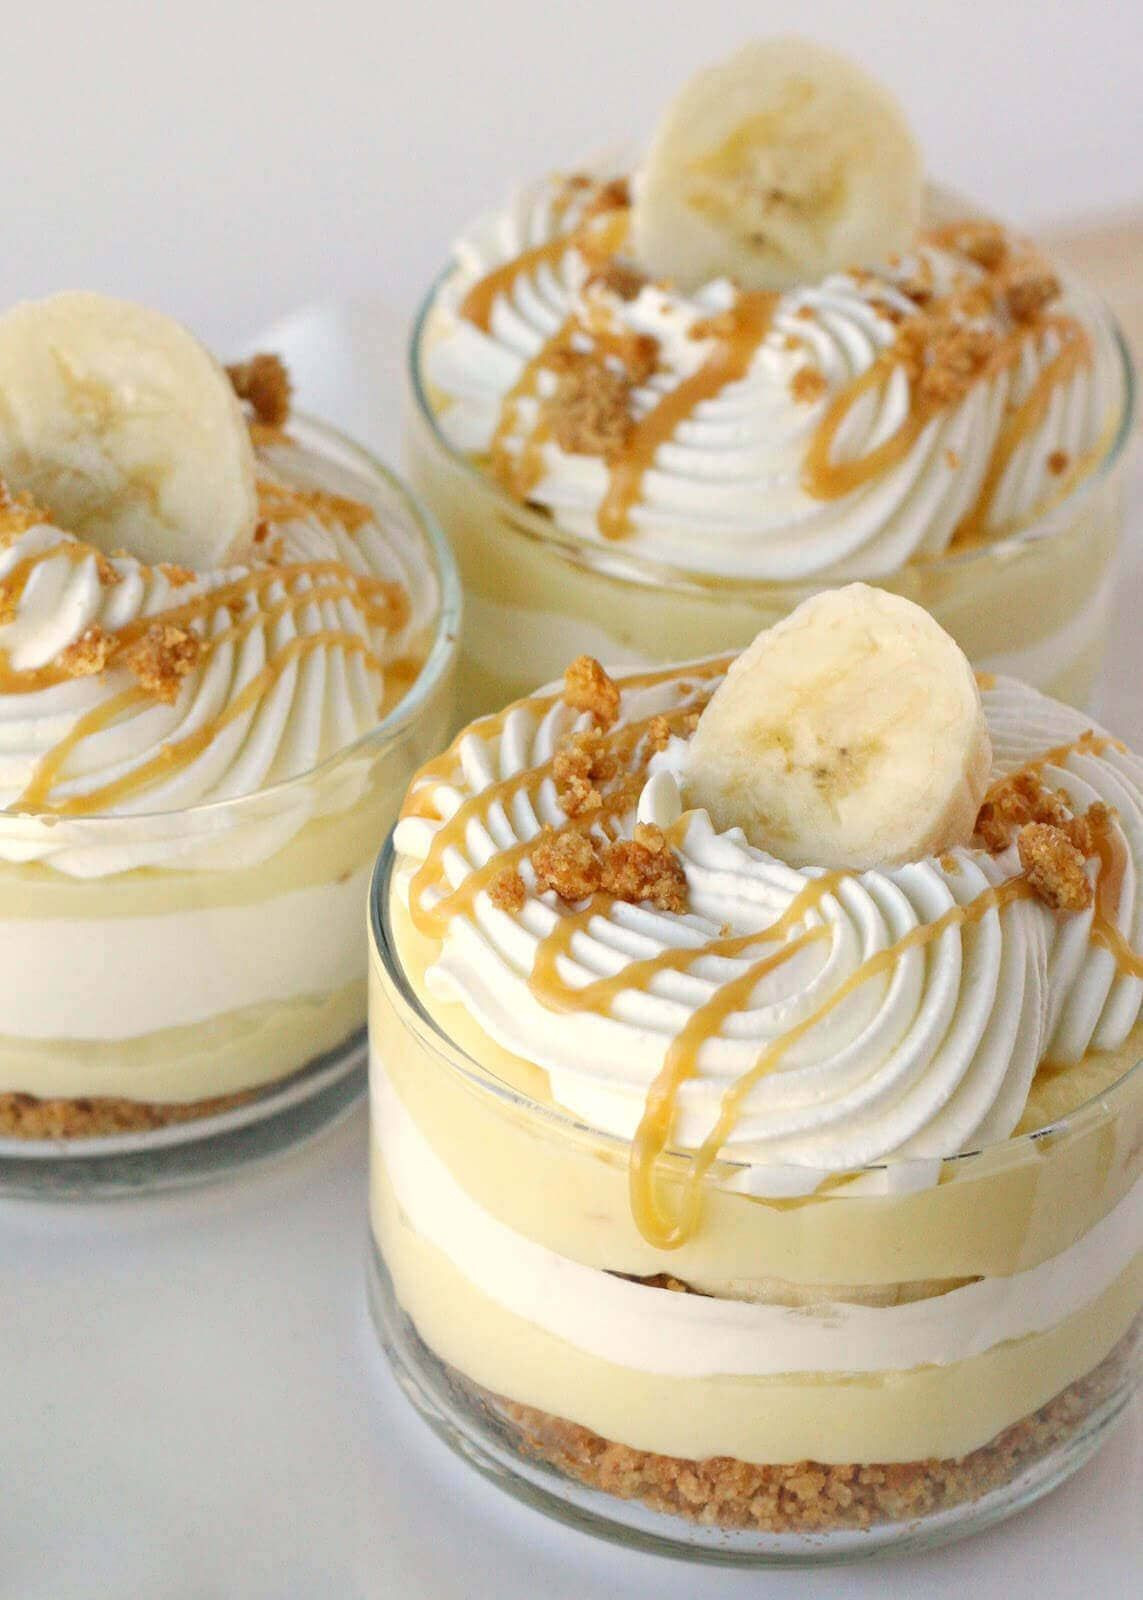 Best Thanksgiving Desserts 2019
 37 Best Banana Dessert Recipes that You Must Eat in 2019